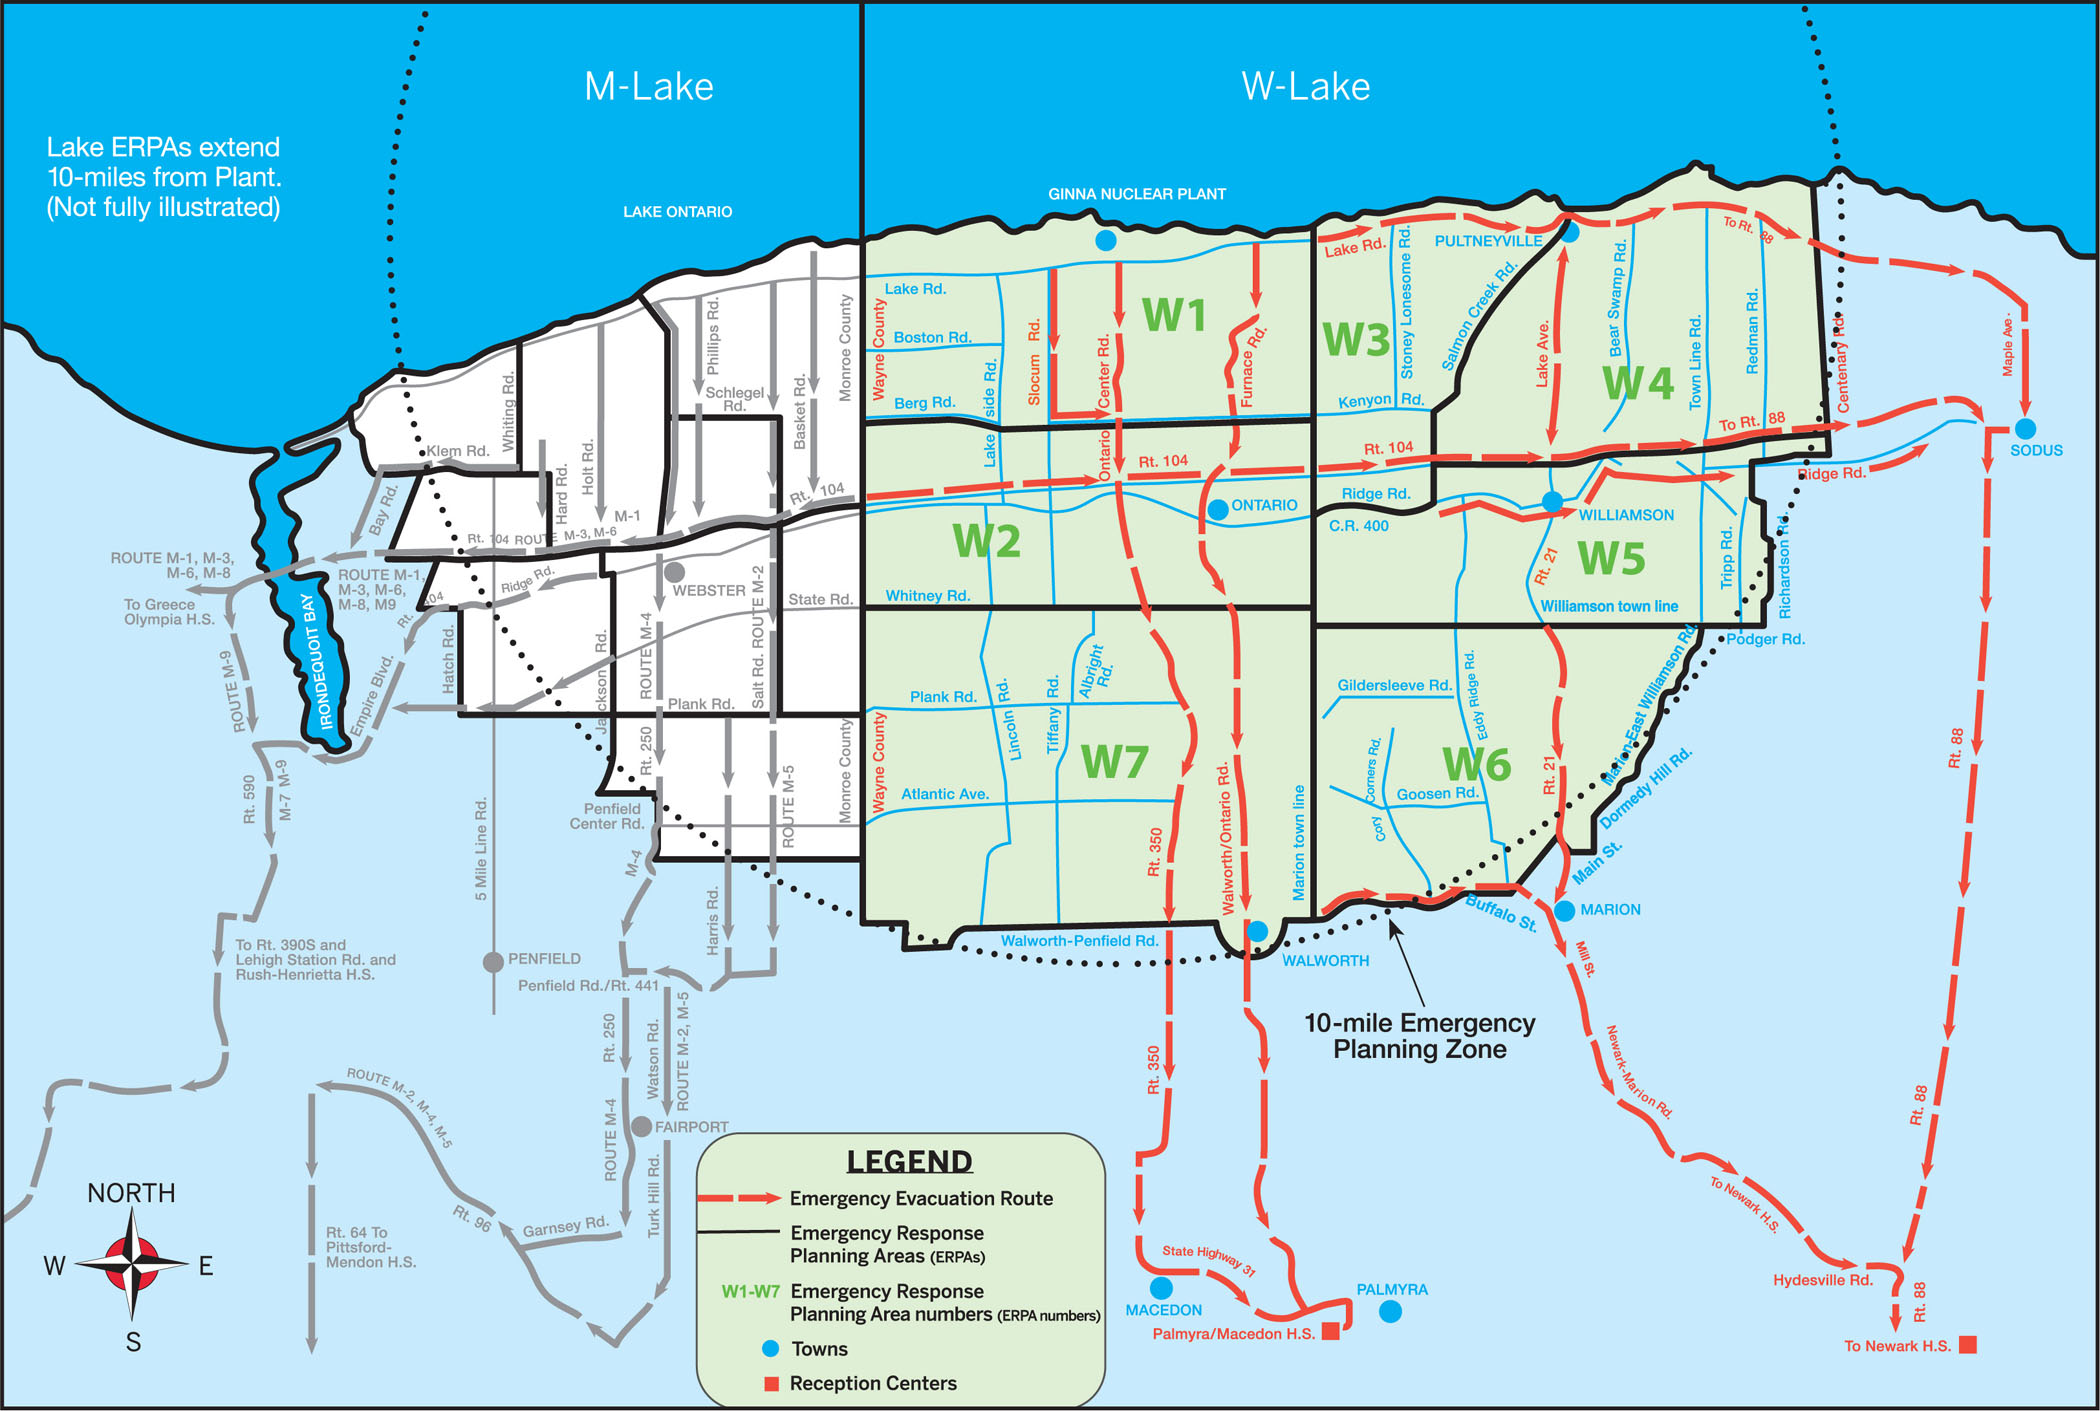 Wayne County Emergency Response Planning Areas (ERPAs)